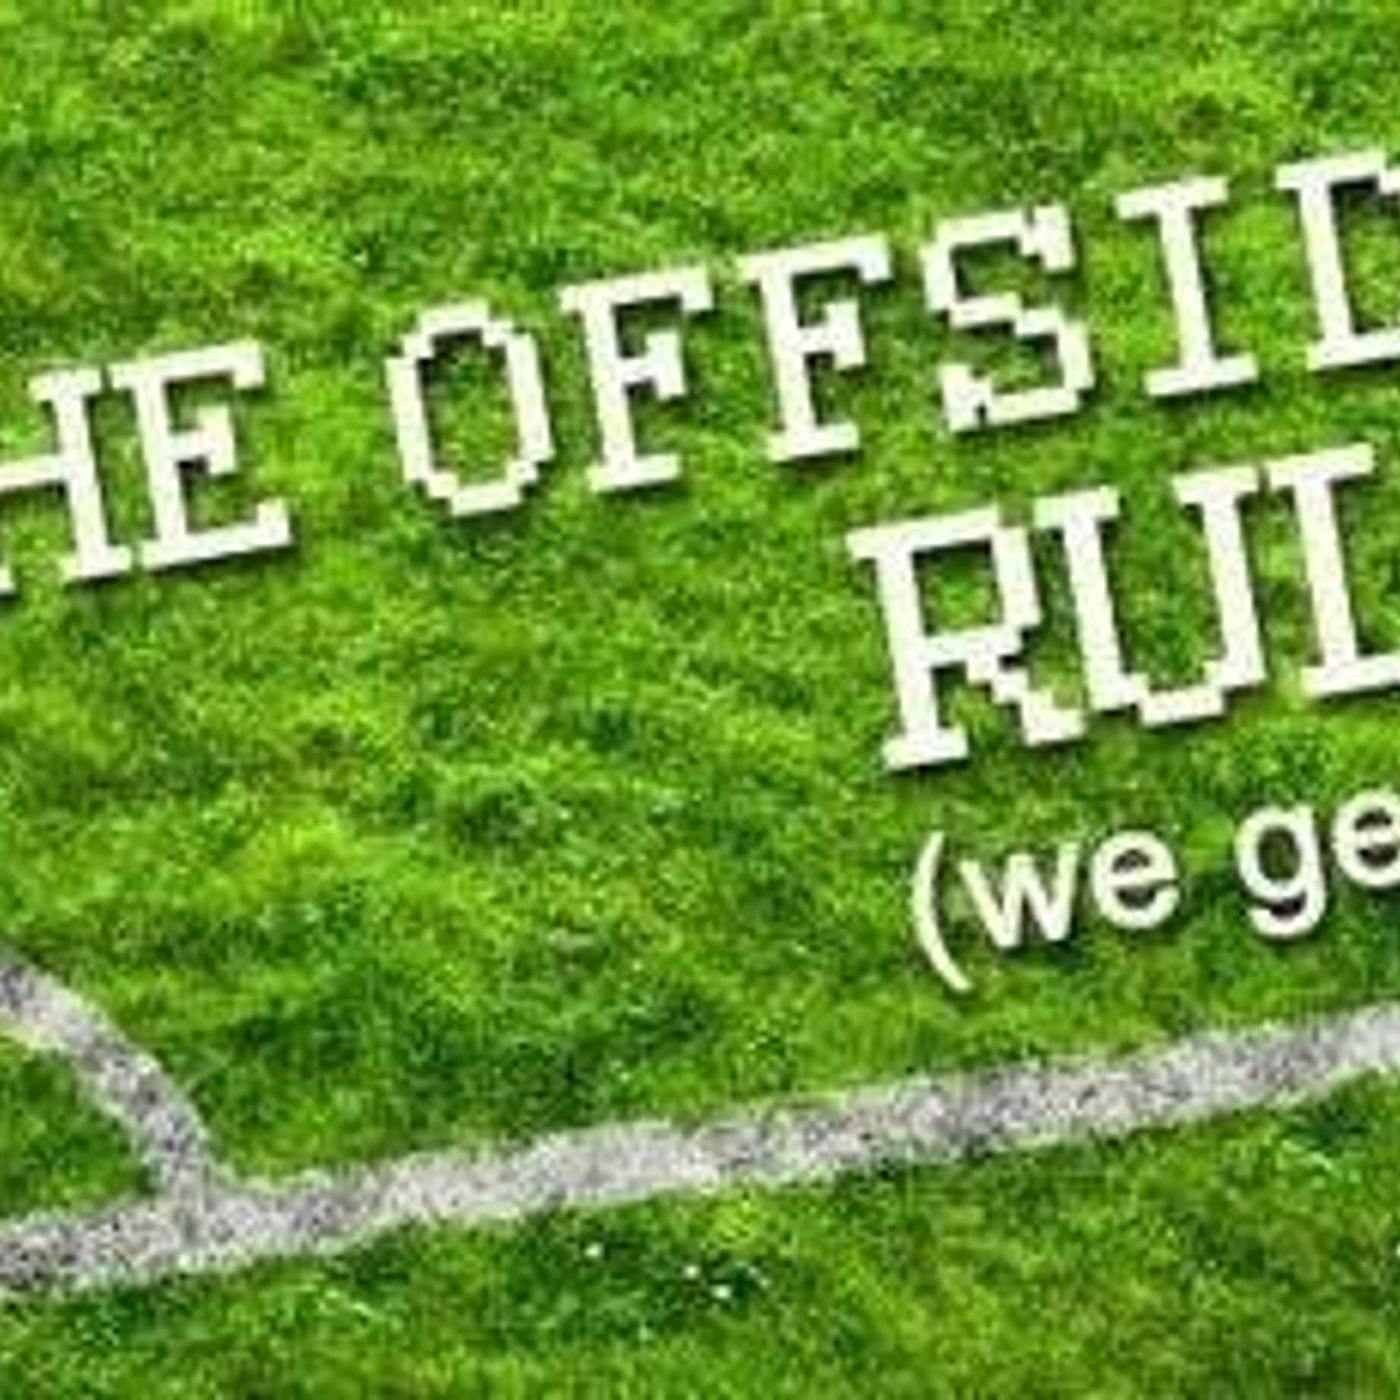 The Offside Rule 2013/14 Episode 22